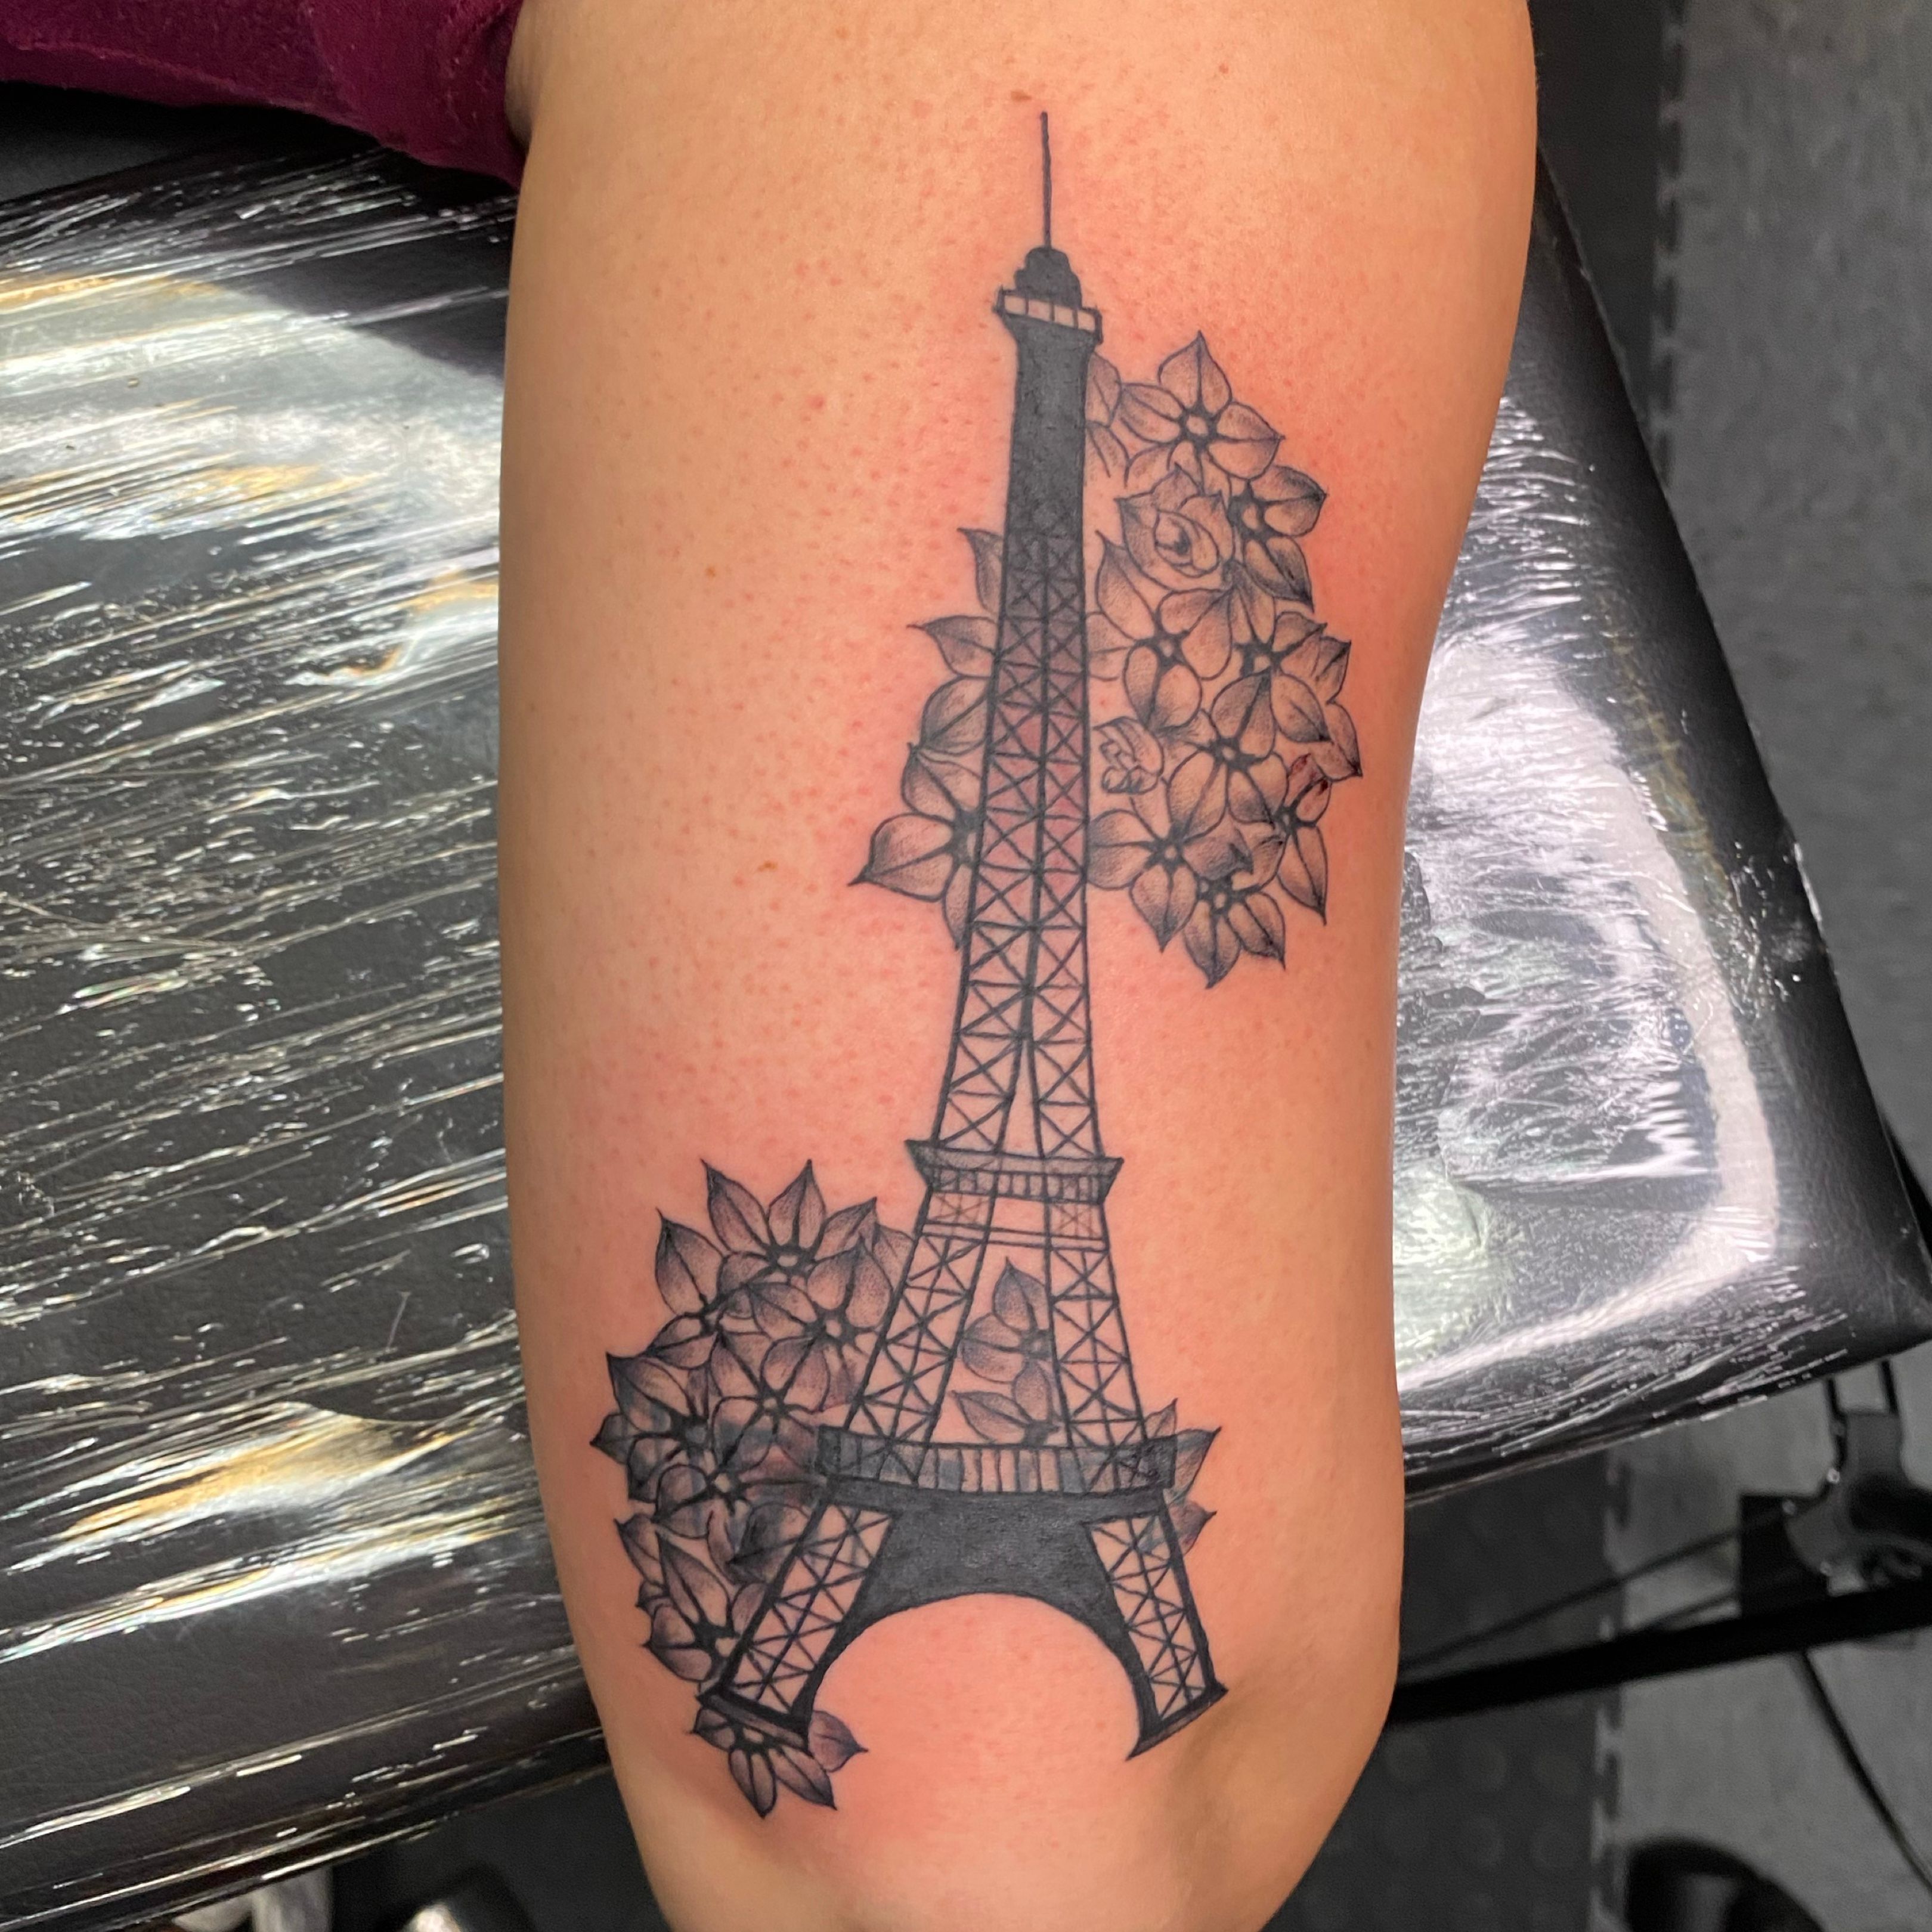 Eiffel Tower Temporary Tattoo Set of 3  Small Tattoos